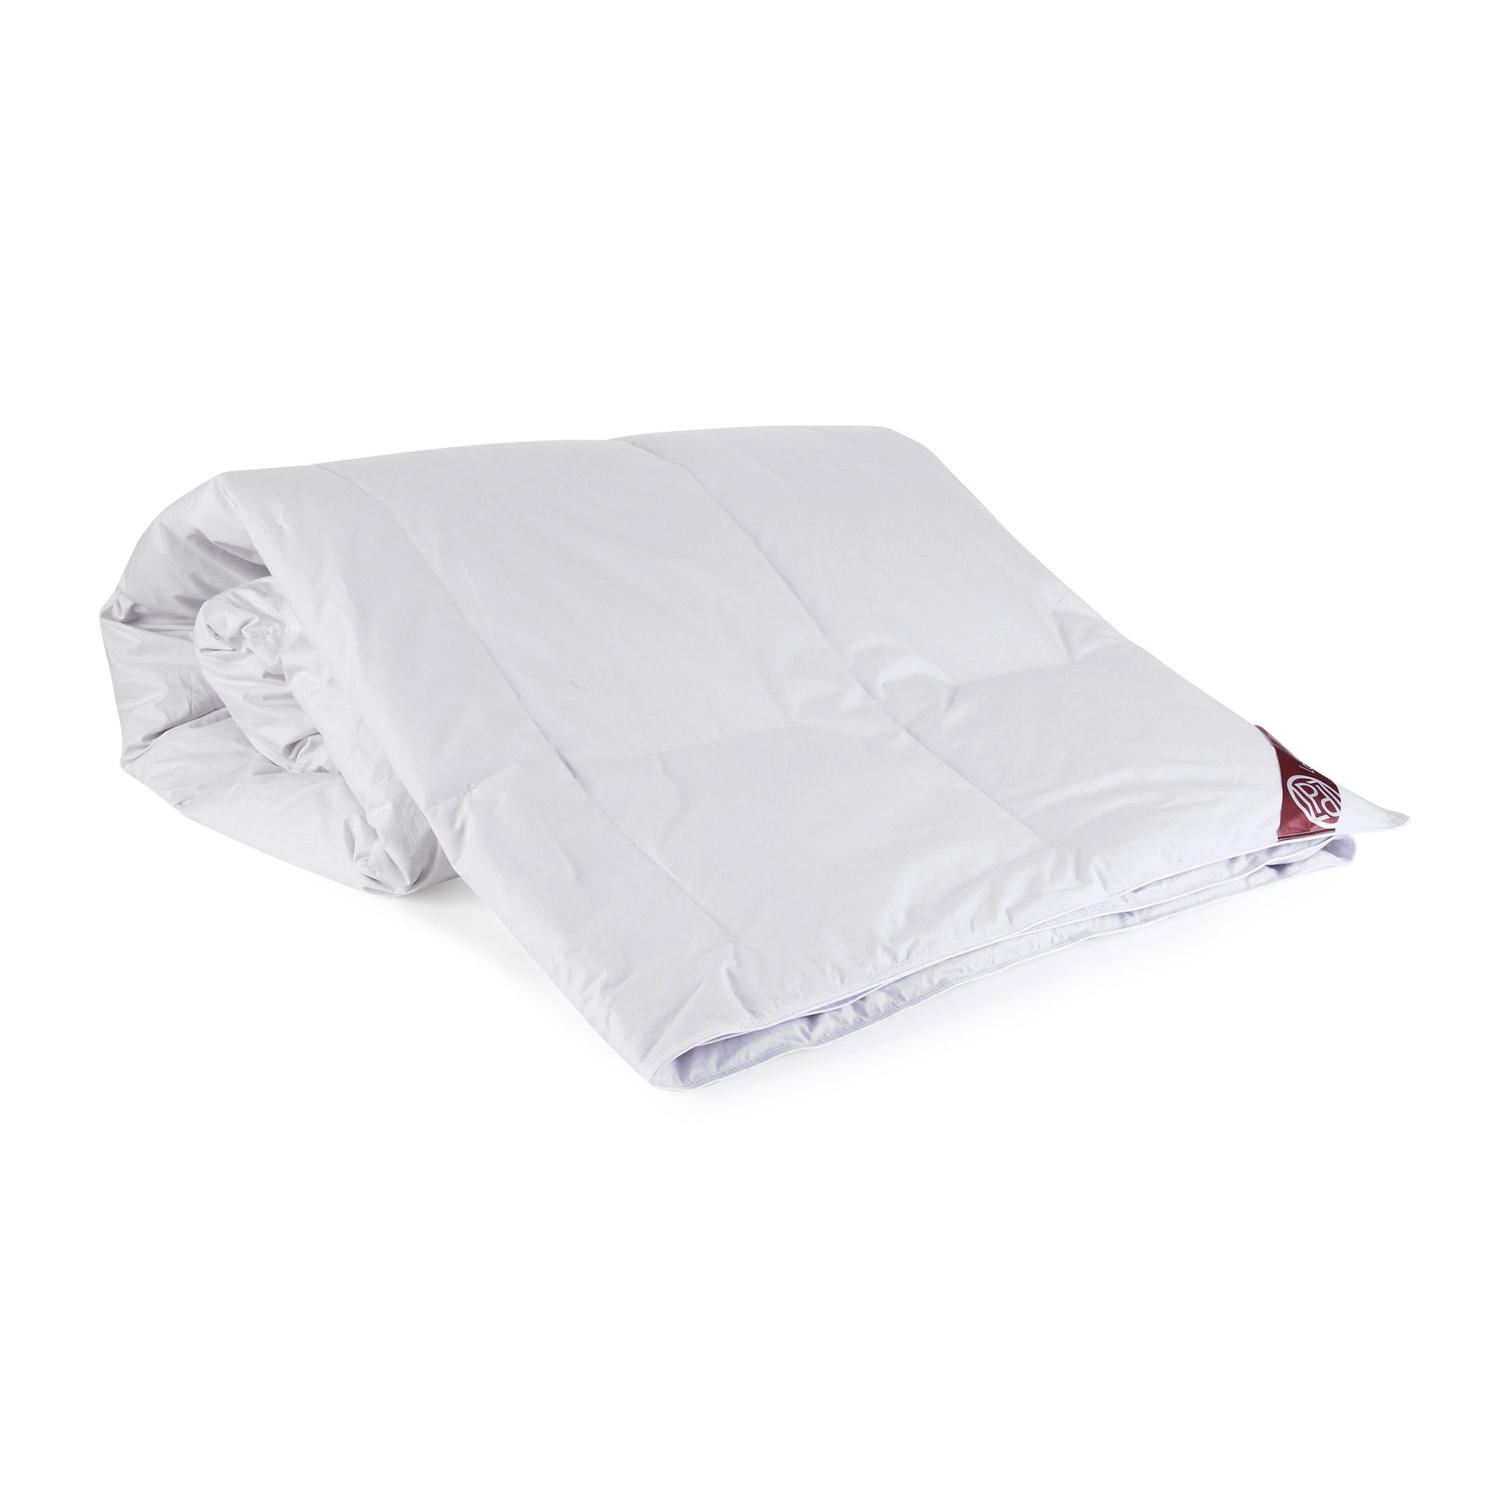 Пуховое одеяло Louis Pascal Камилла белое 200х220 см (ЛП2034) пуховое одеяло louis pascal камилла белое 200х220 см лп2034